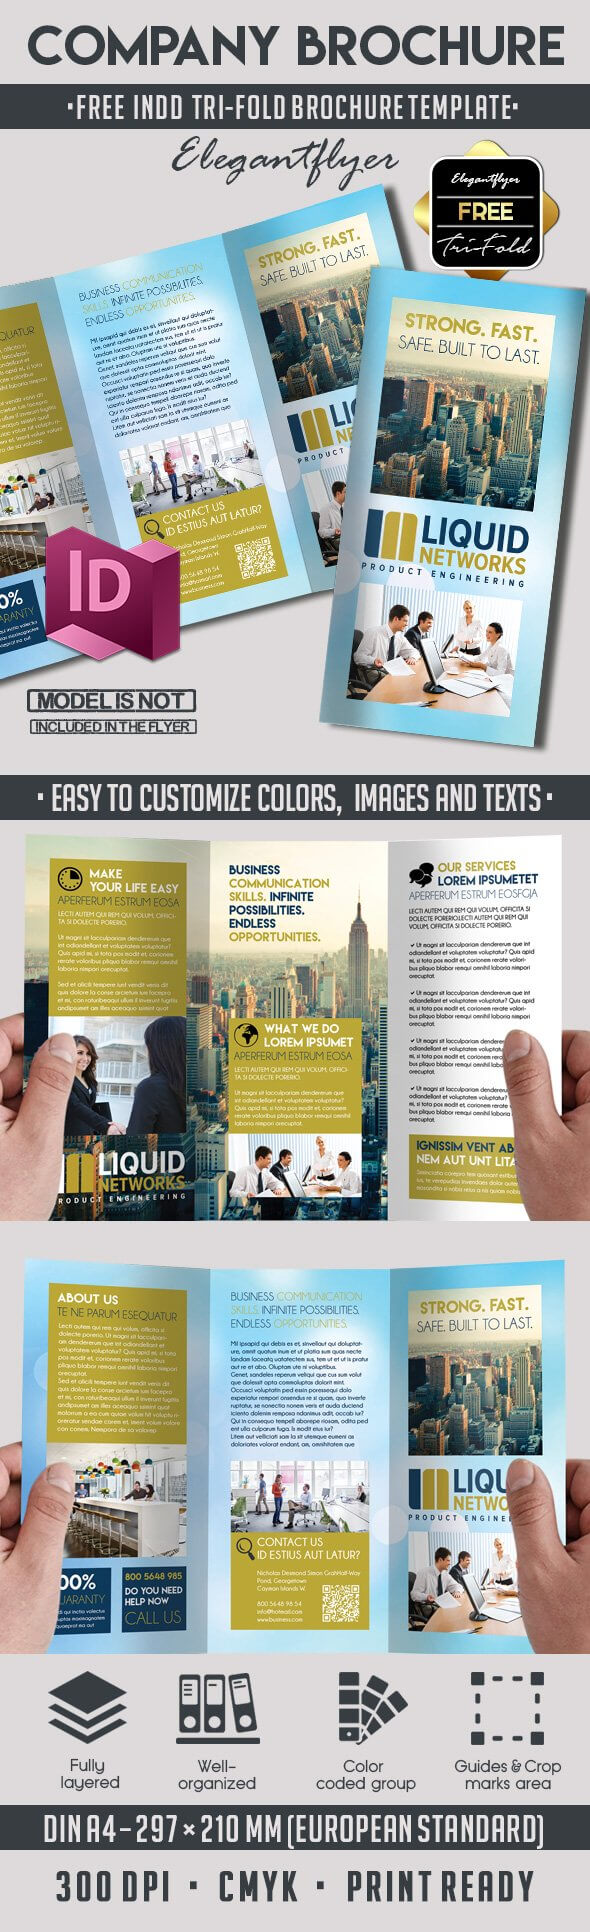 5 Powerful Free Adobe Indesign Brochures Templates! | In Adobe Indesign Tri Fold Brochure Template